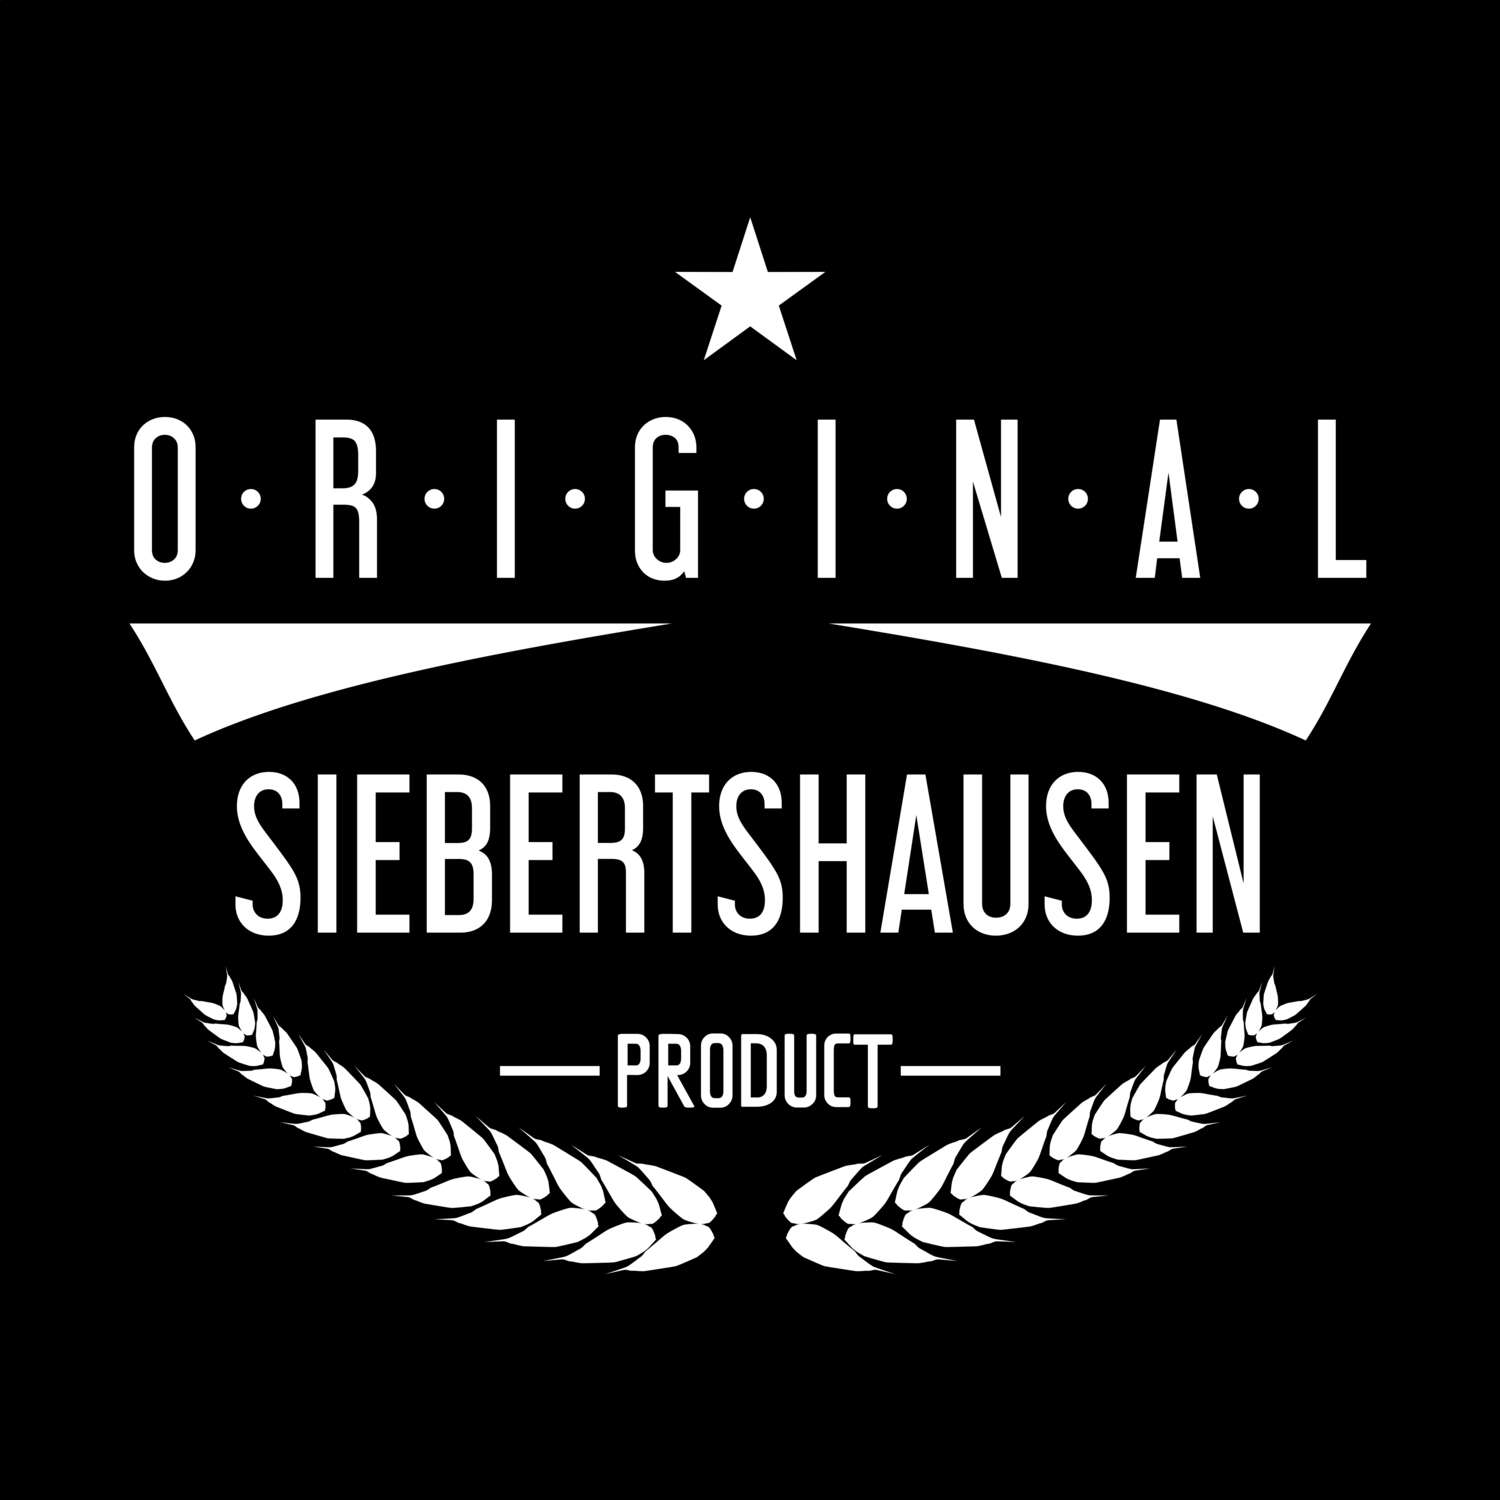 Siebertshausen T-Shirt »Original Product«